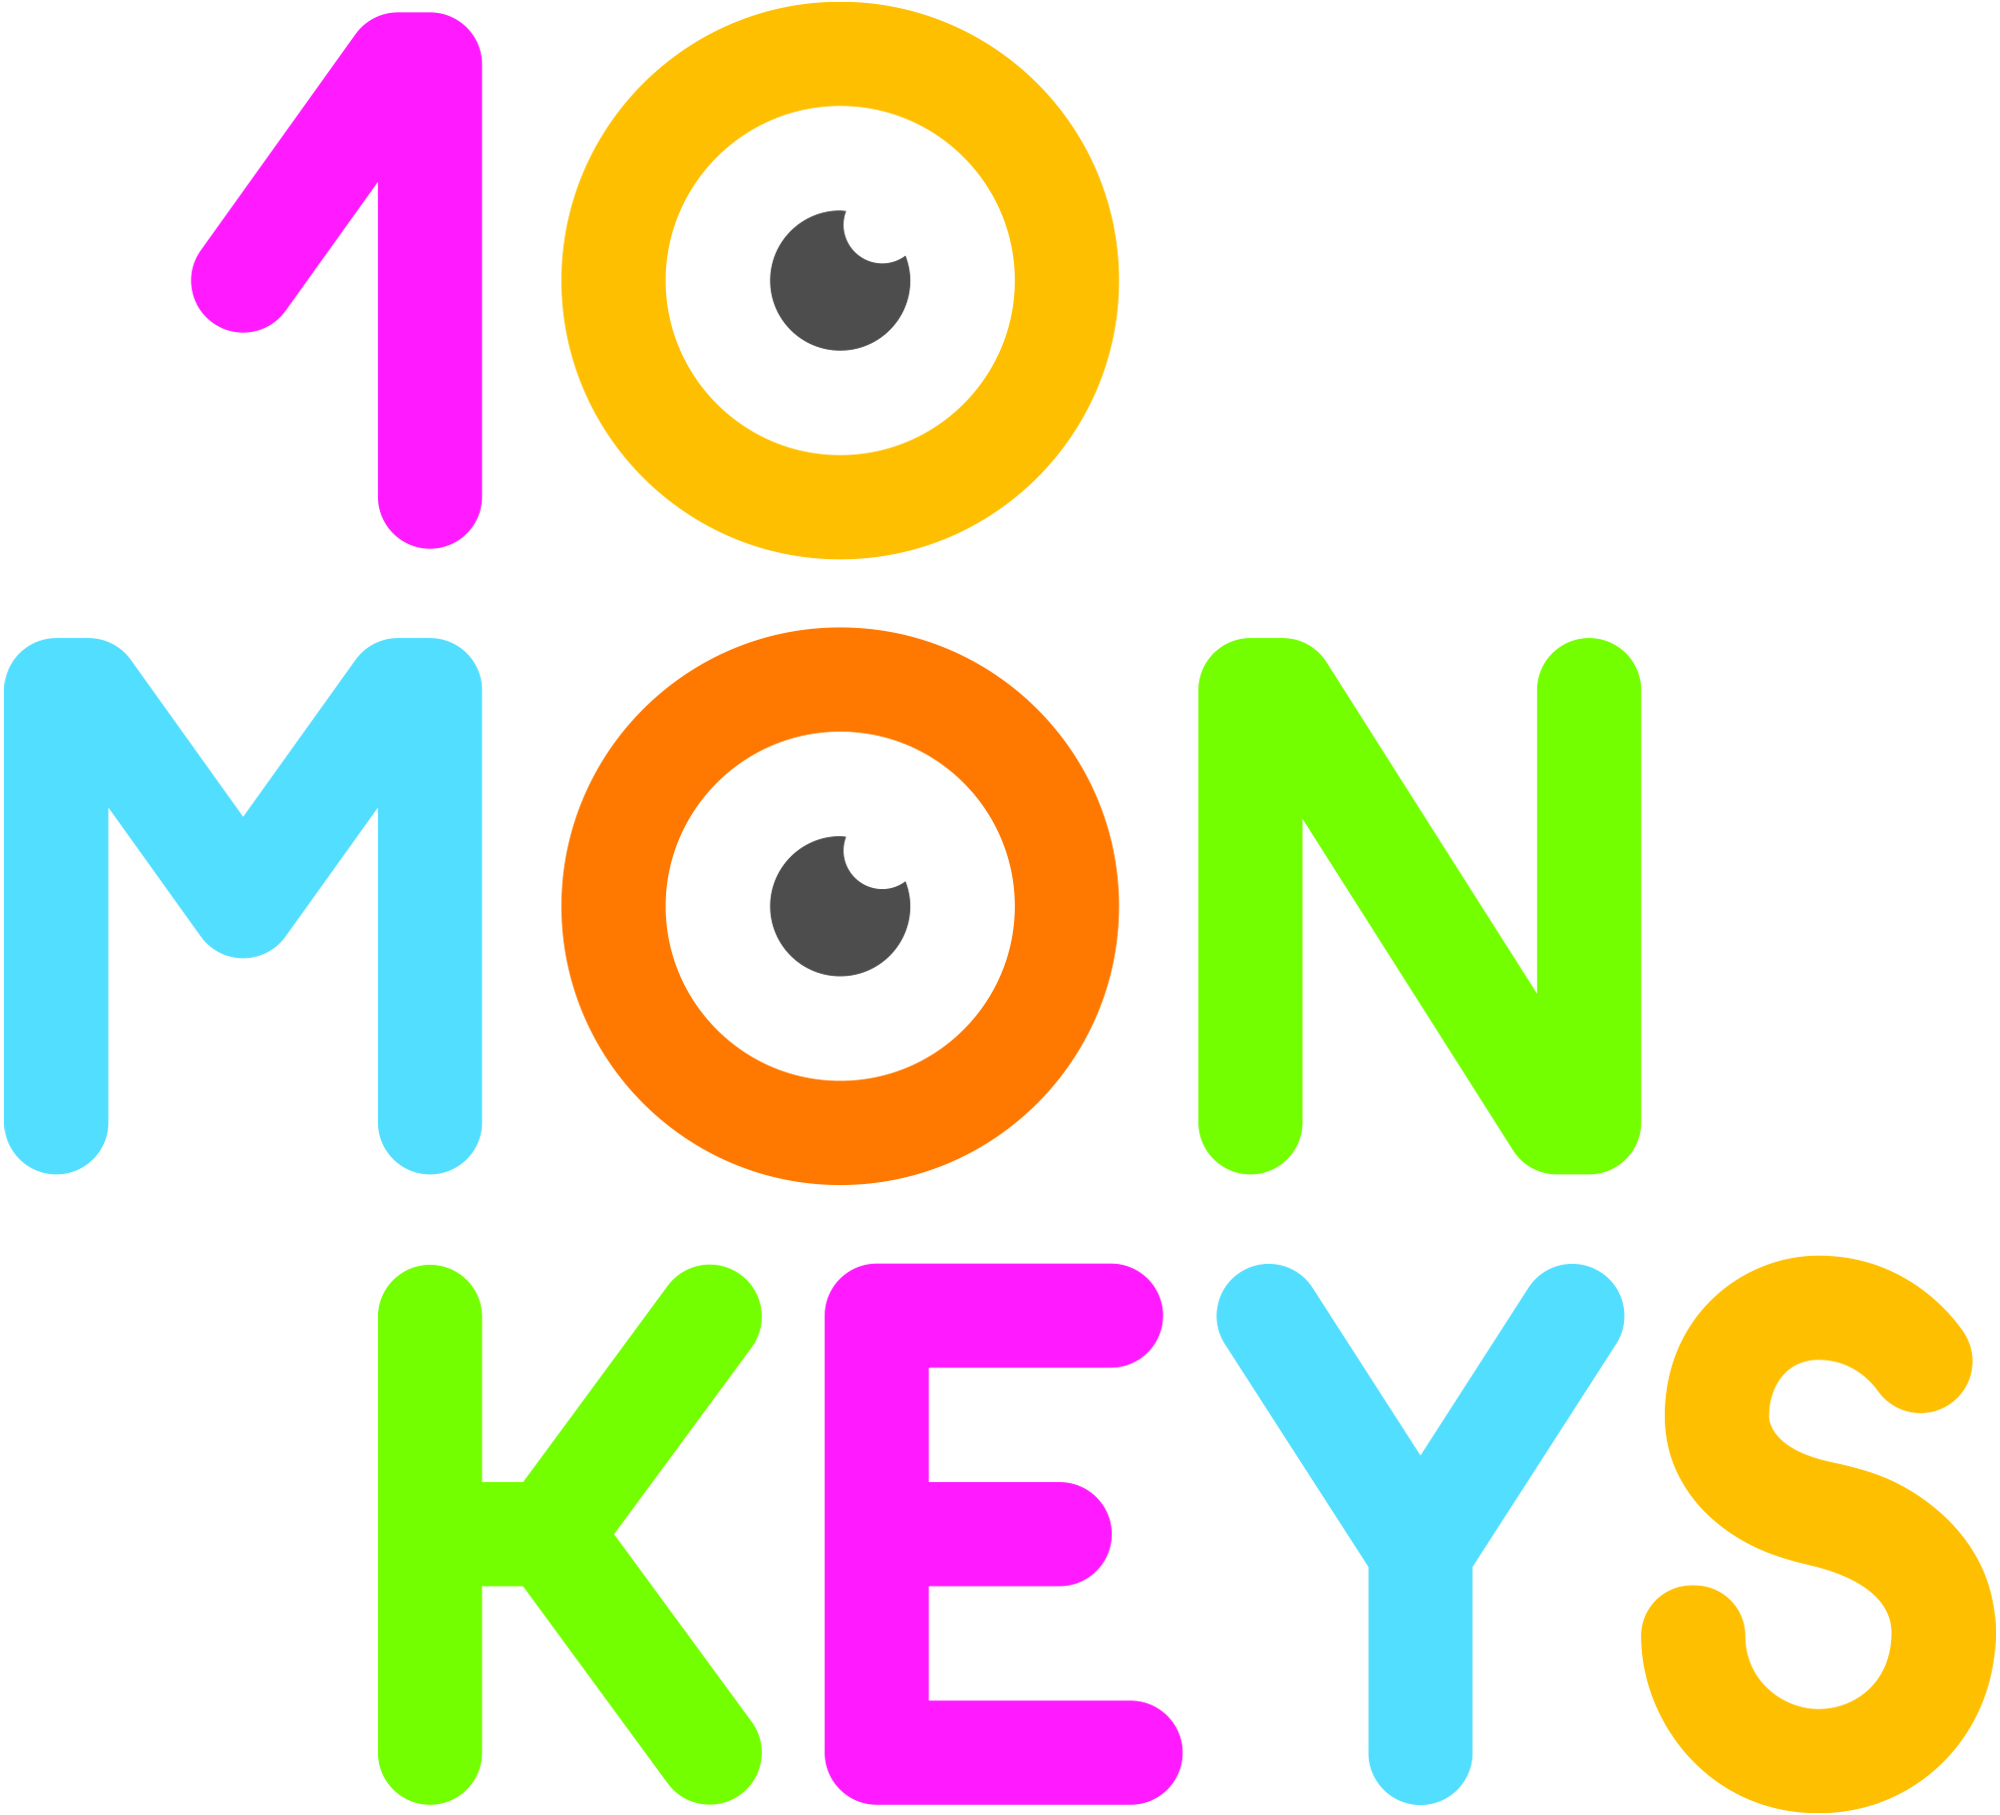 10monkeys